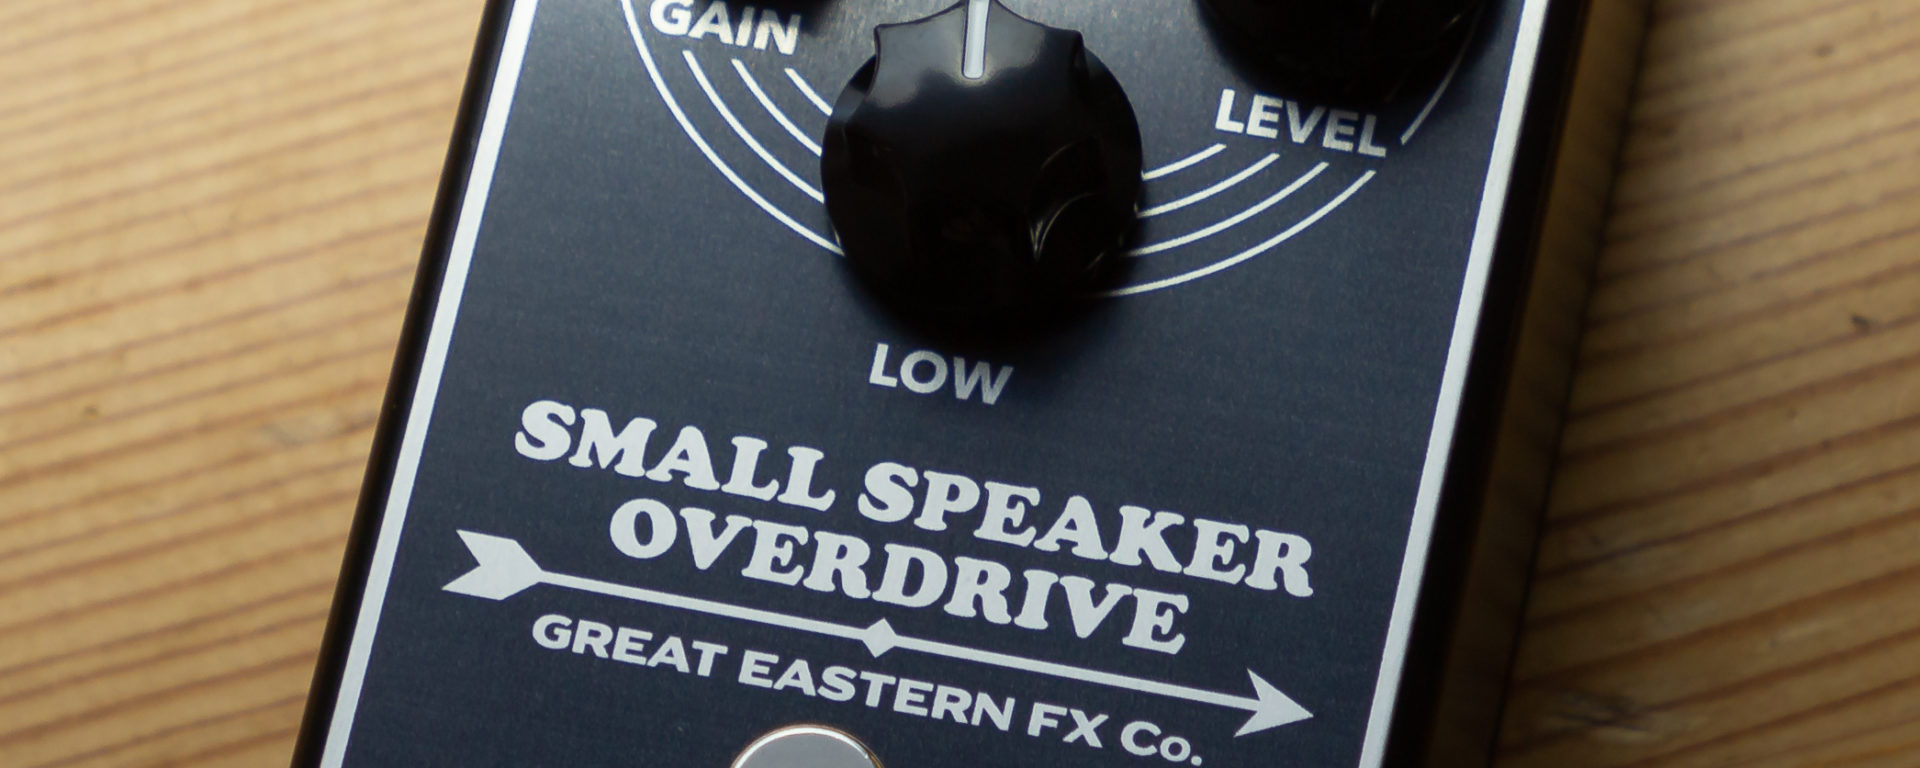 Great Eastern FX Co. - Small Speaker Overdrive